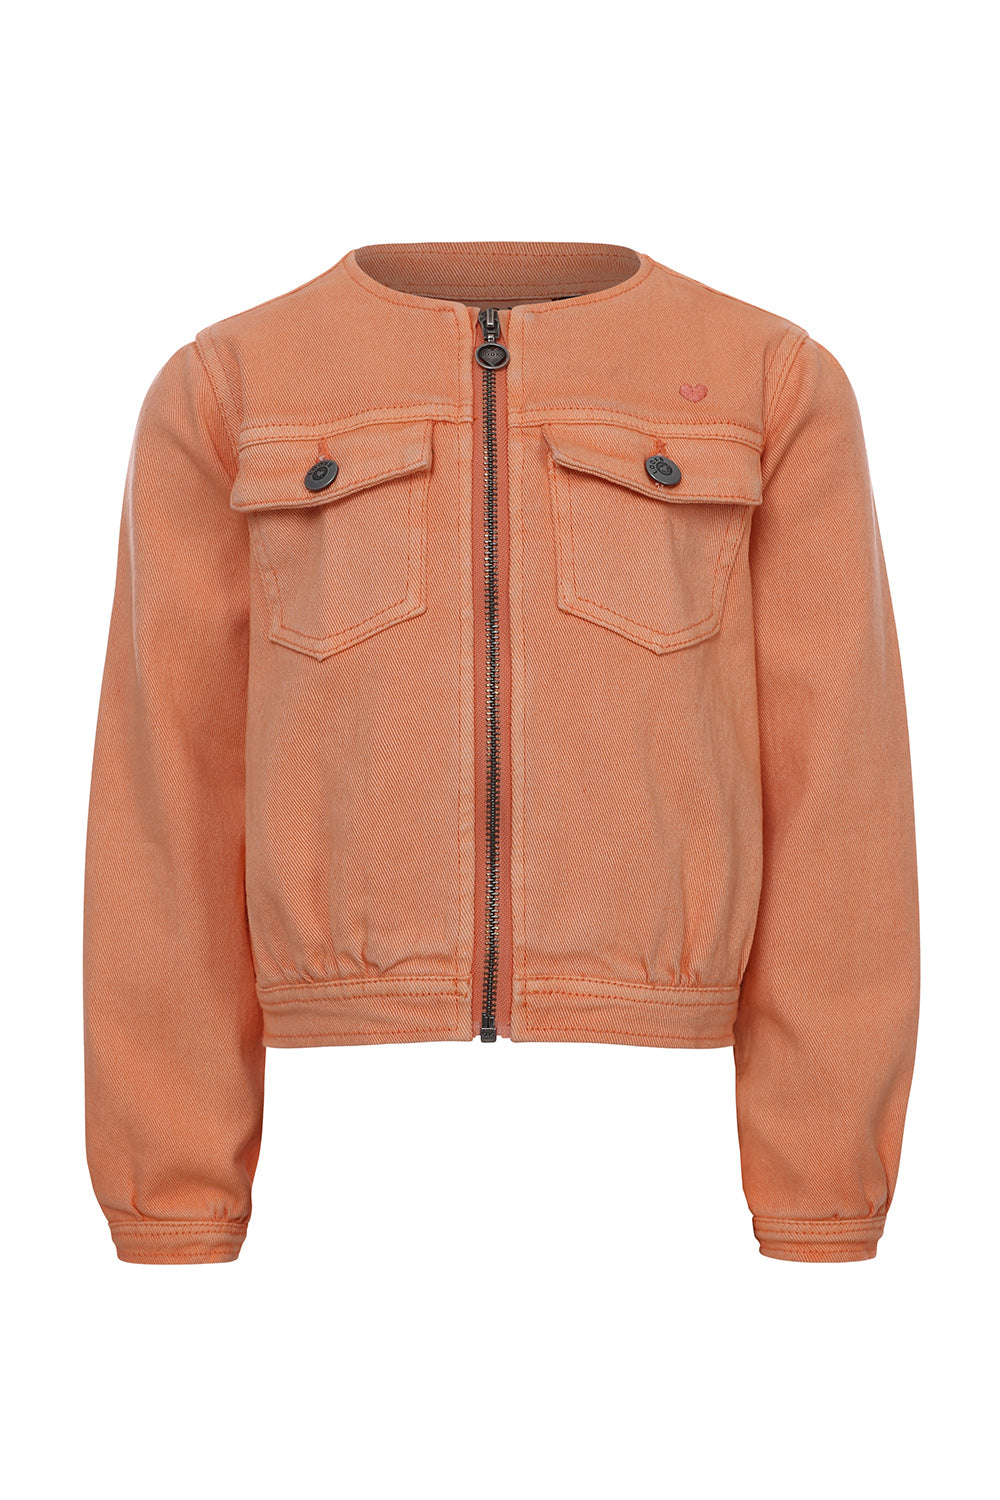 Meisjes Gm Dye Denim Jacket van LOOXS Little in de kleur Orange peach in maat 128.